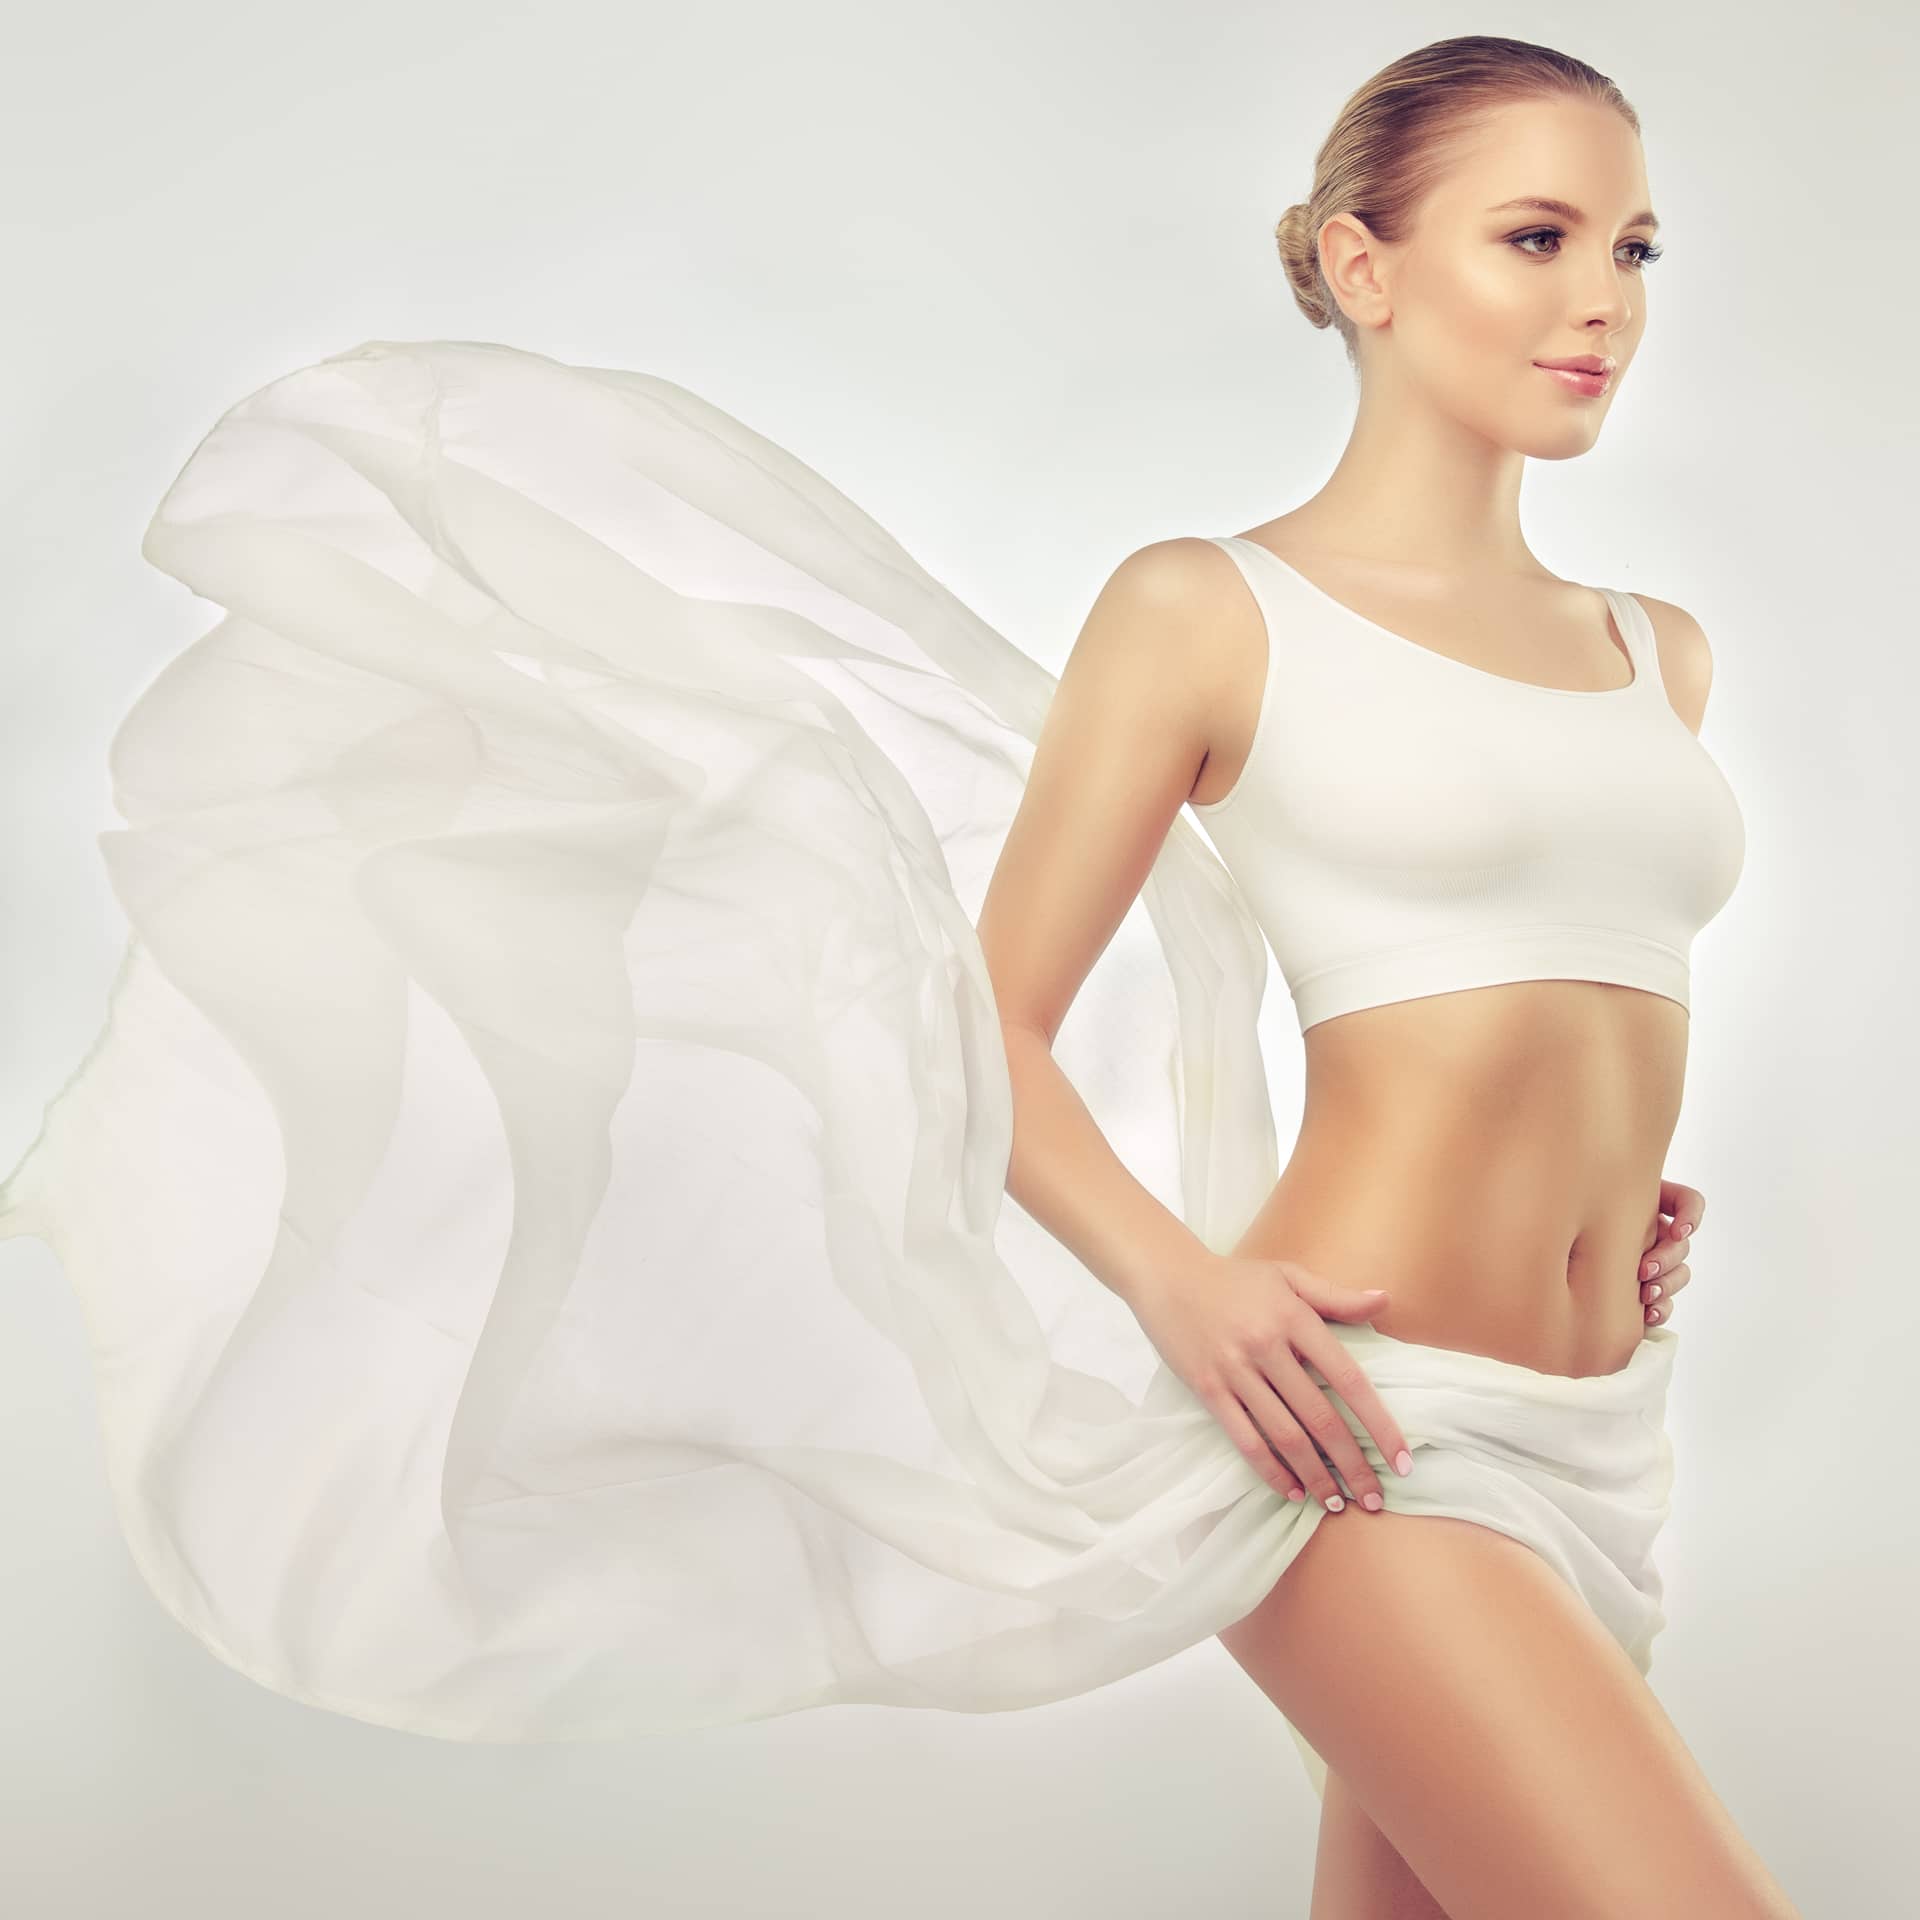 With graceful slim body dressed white sport underwear slender female